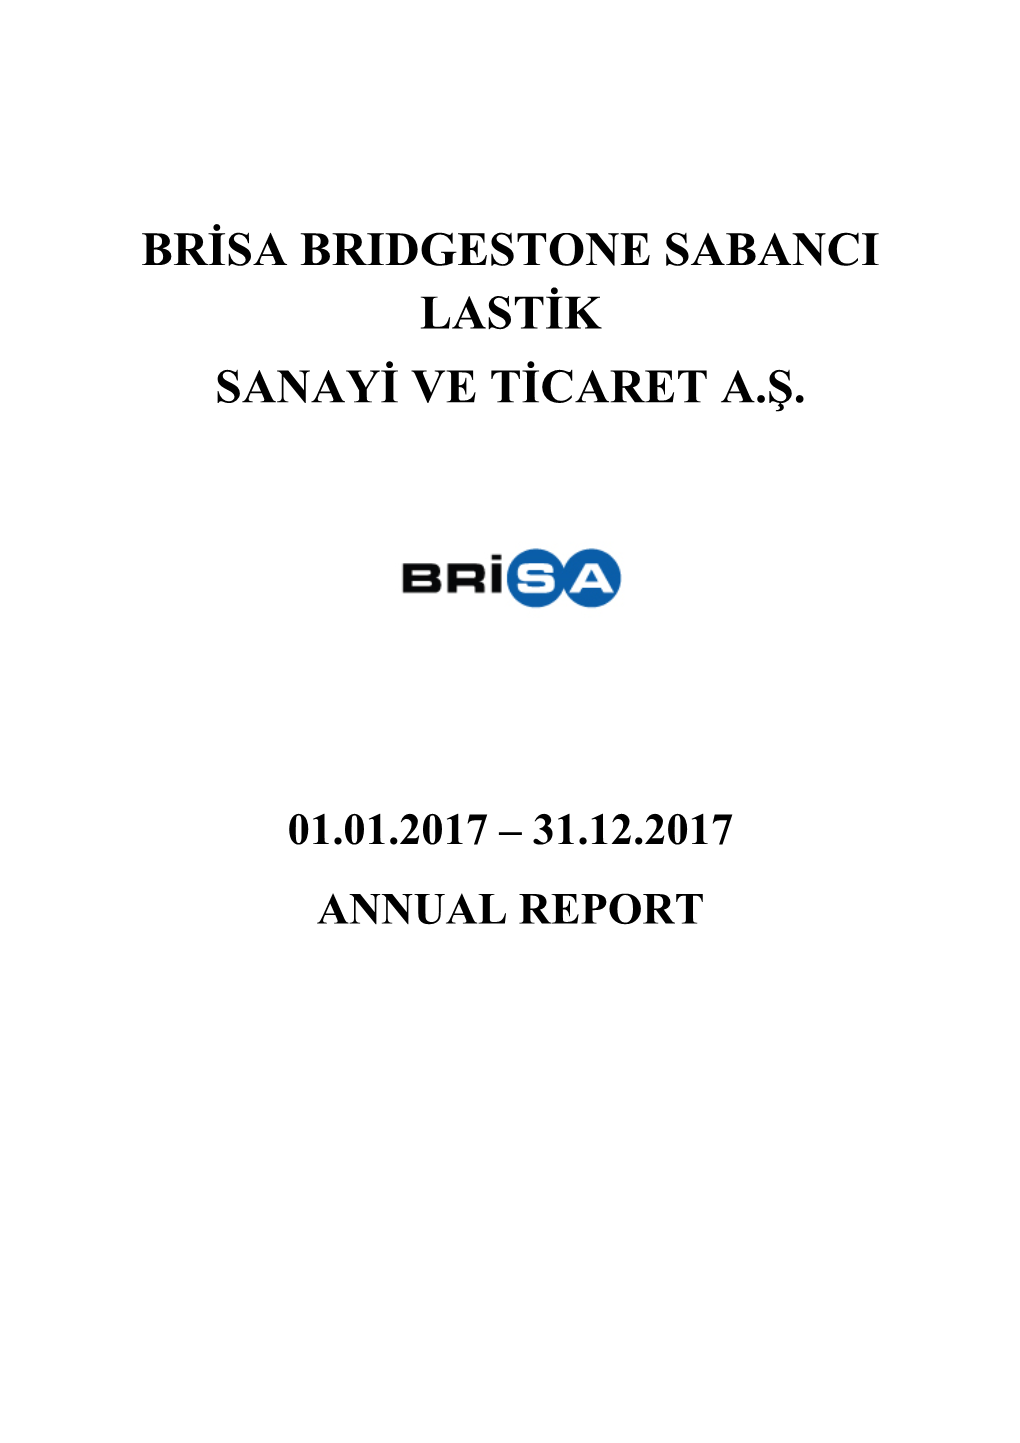 Brisa Bridgestone Sabanci Lastik Sanayi Ve Ticaret A.Ş